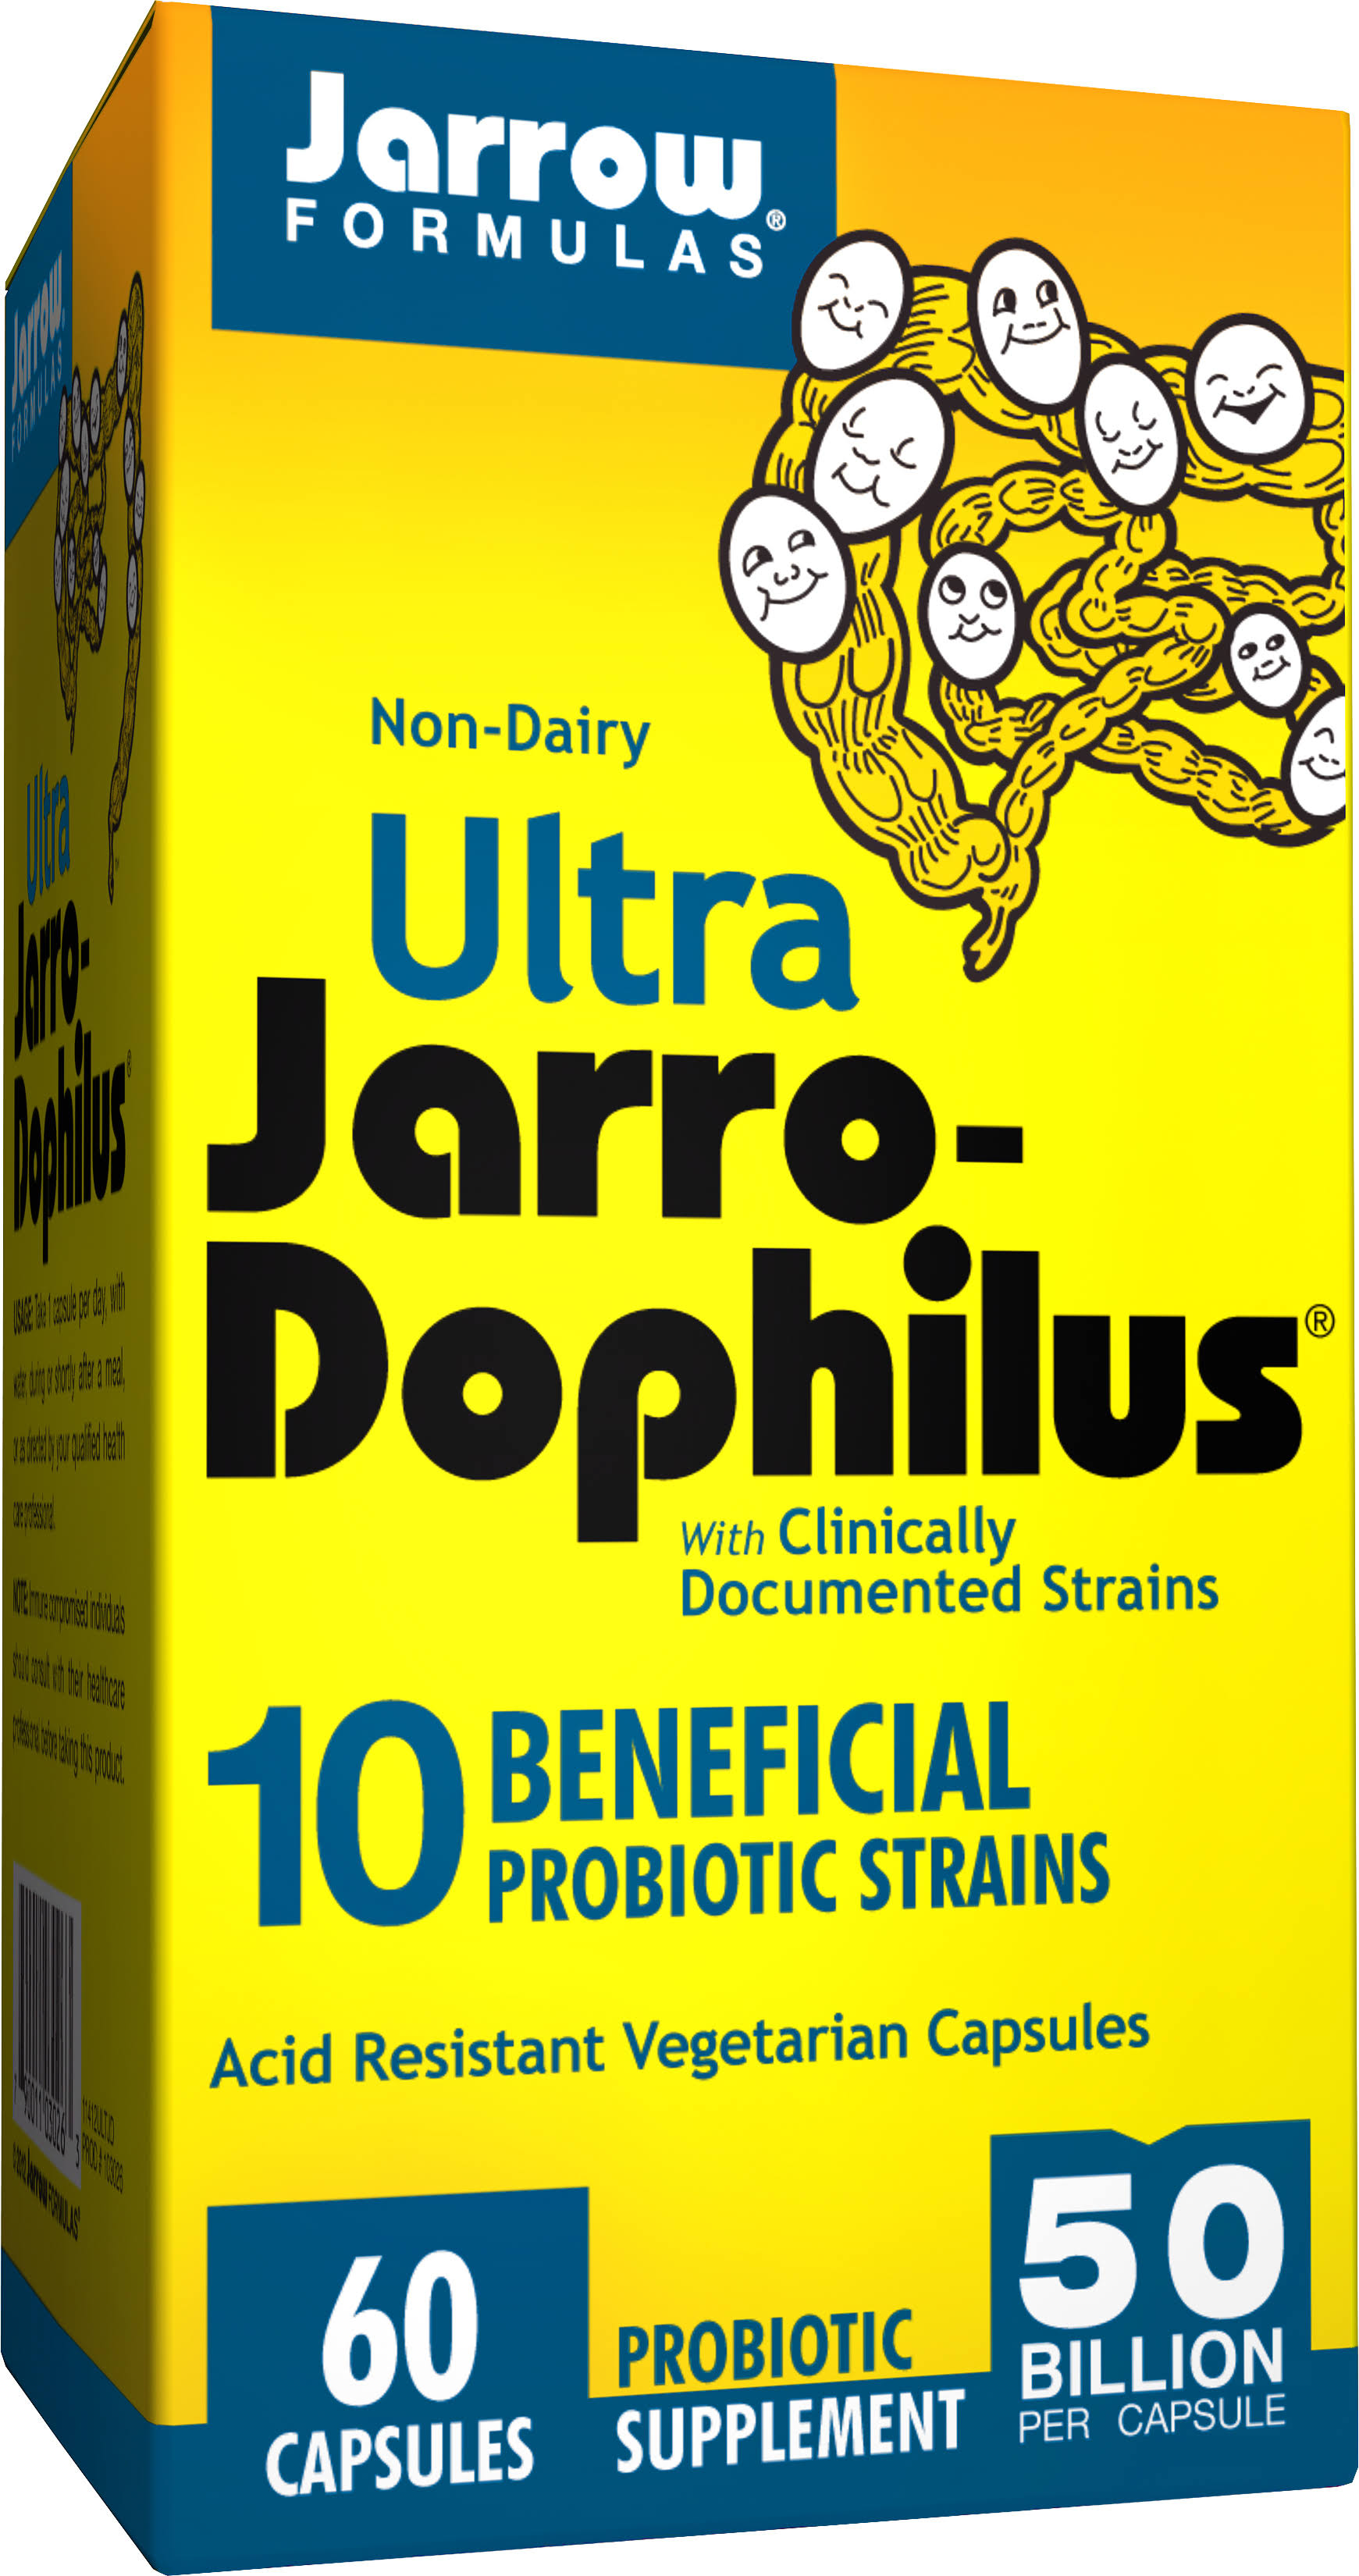 Jarrow Formulas Ultra Jarro-Dophilus - 60 capsules